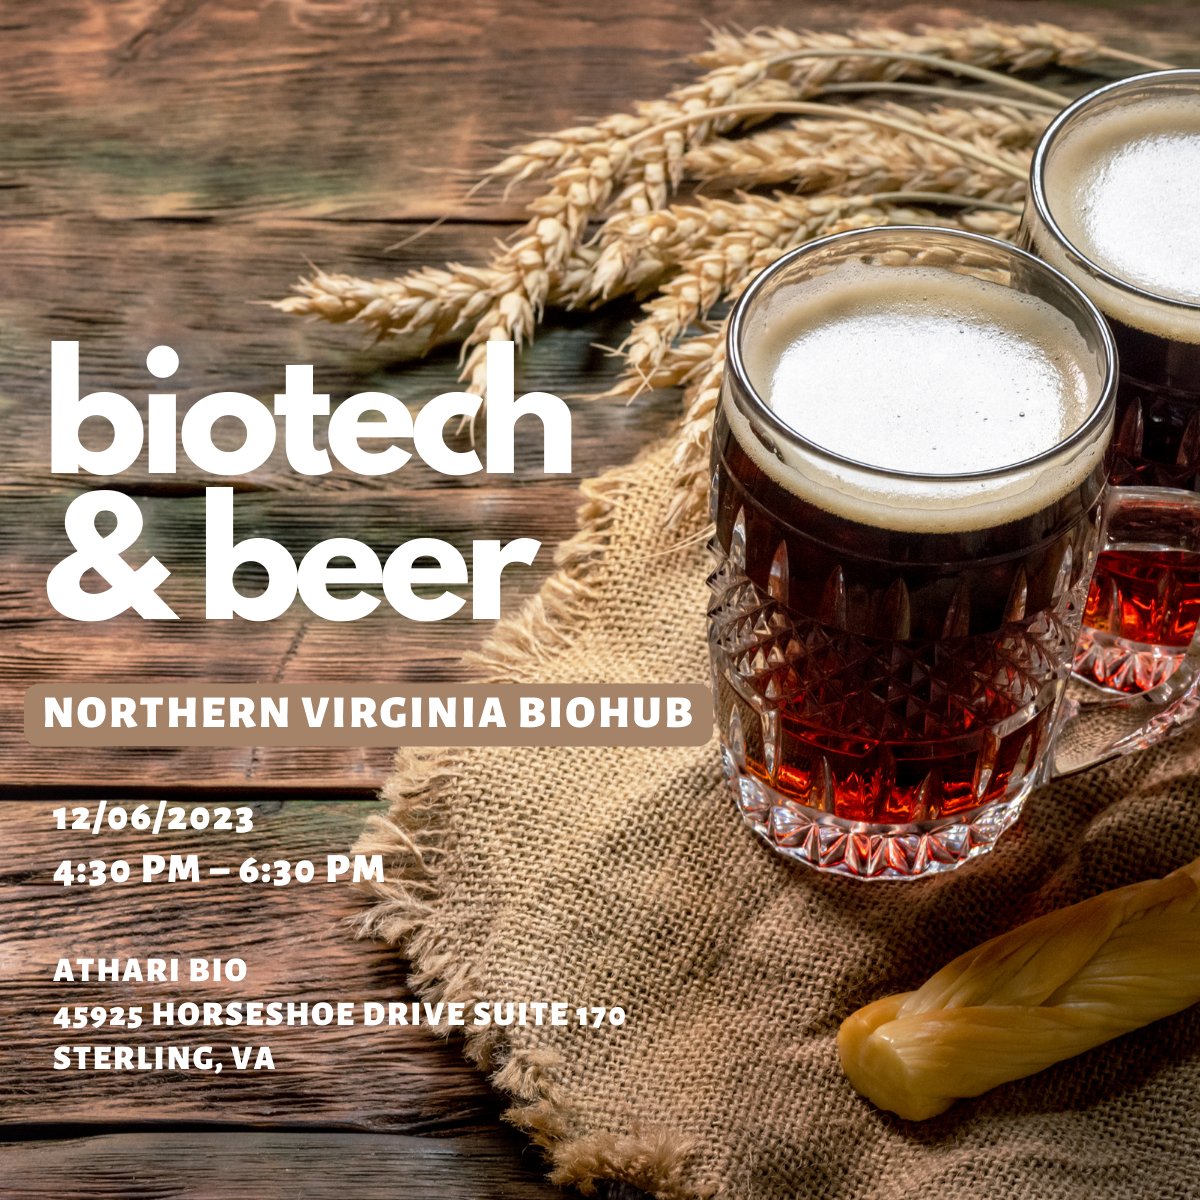 This month's Biotech & Beer, hosted by The NOVA BioHub, takes place at Athari Bio+Sciences. Bio community pros, take advantage of this fantastic networking opportunity!
👉 ow.ly/nGb250Qcsqf

#VABioConnect @GeorgeMasonU @LoudounBiz  @GOVirginia @AcademiesofSci @Girlstart